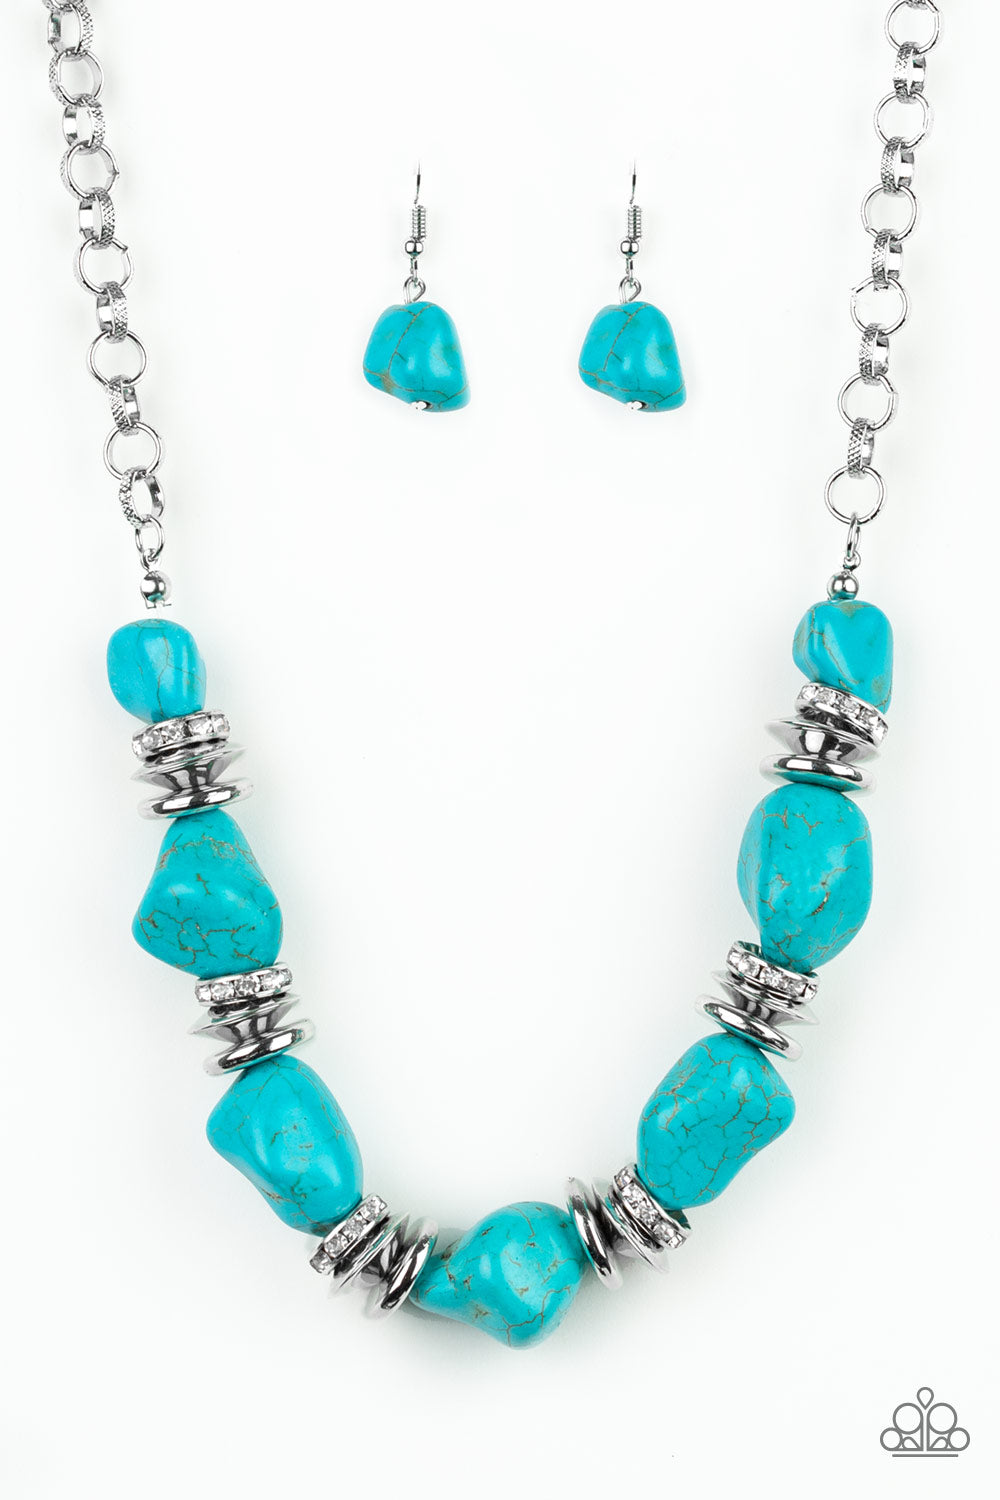 Stunningly Stone Age- Blue Necklace